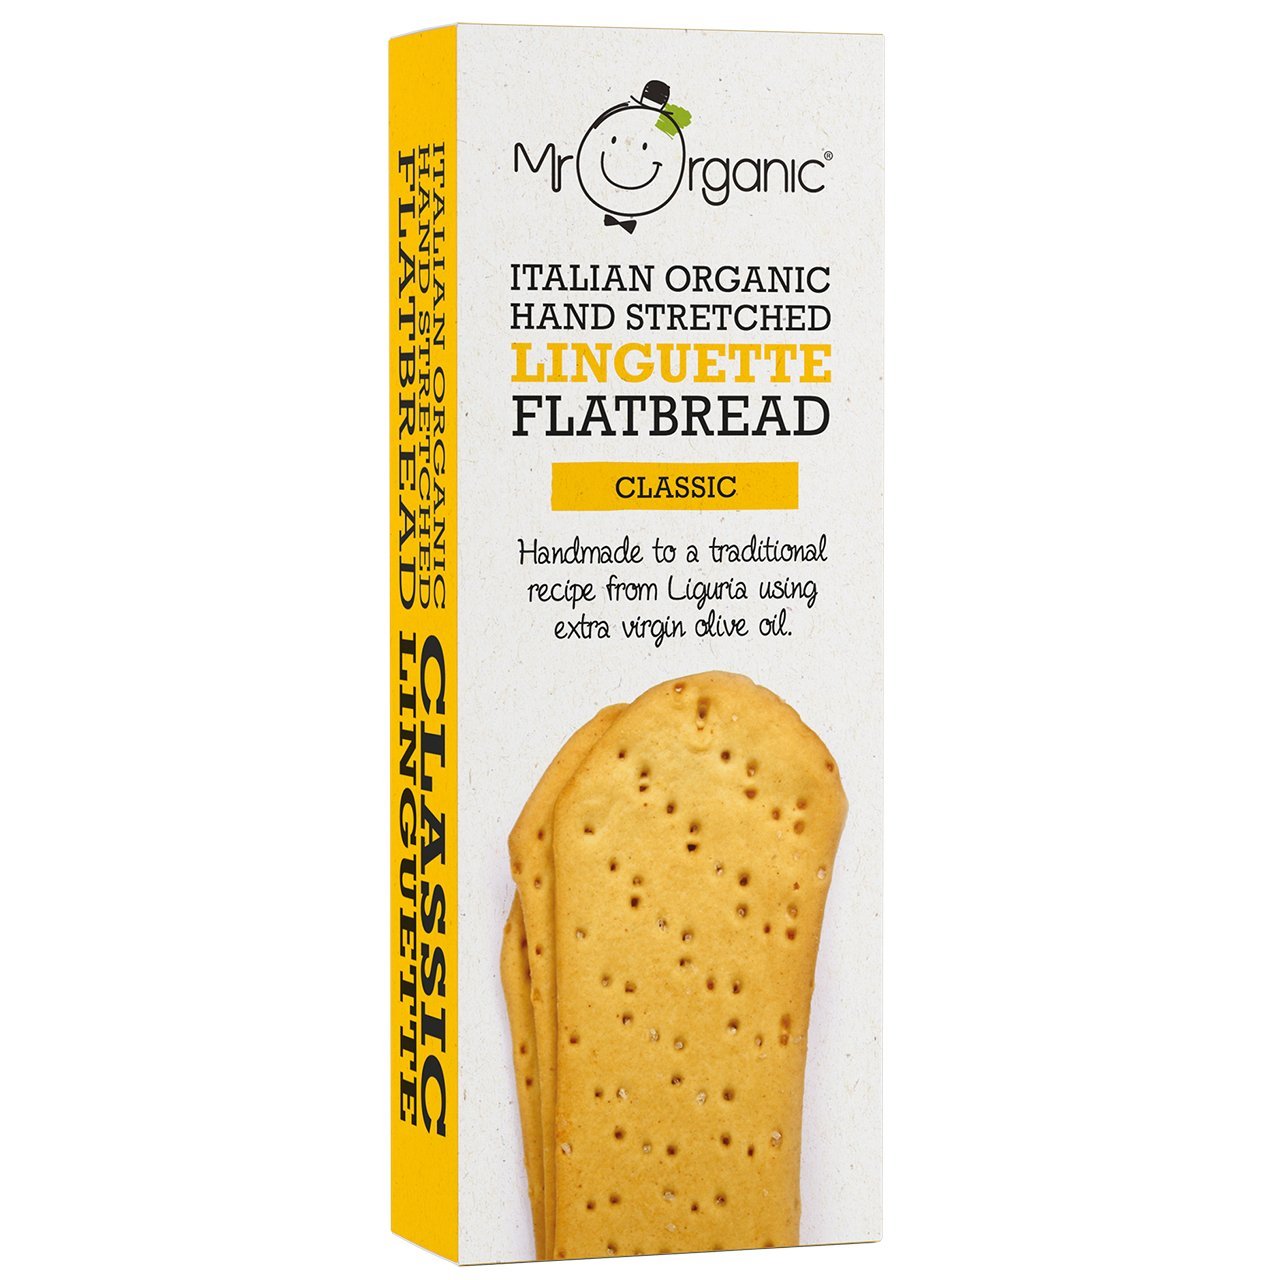 Mr Organic Classic Flatbread (150g)